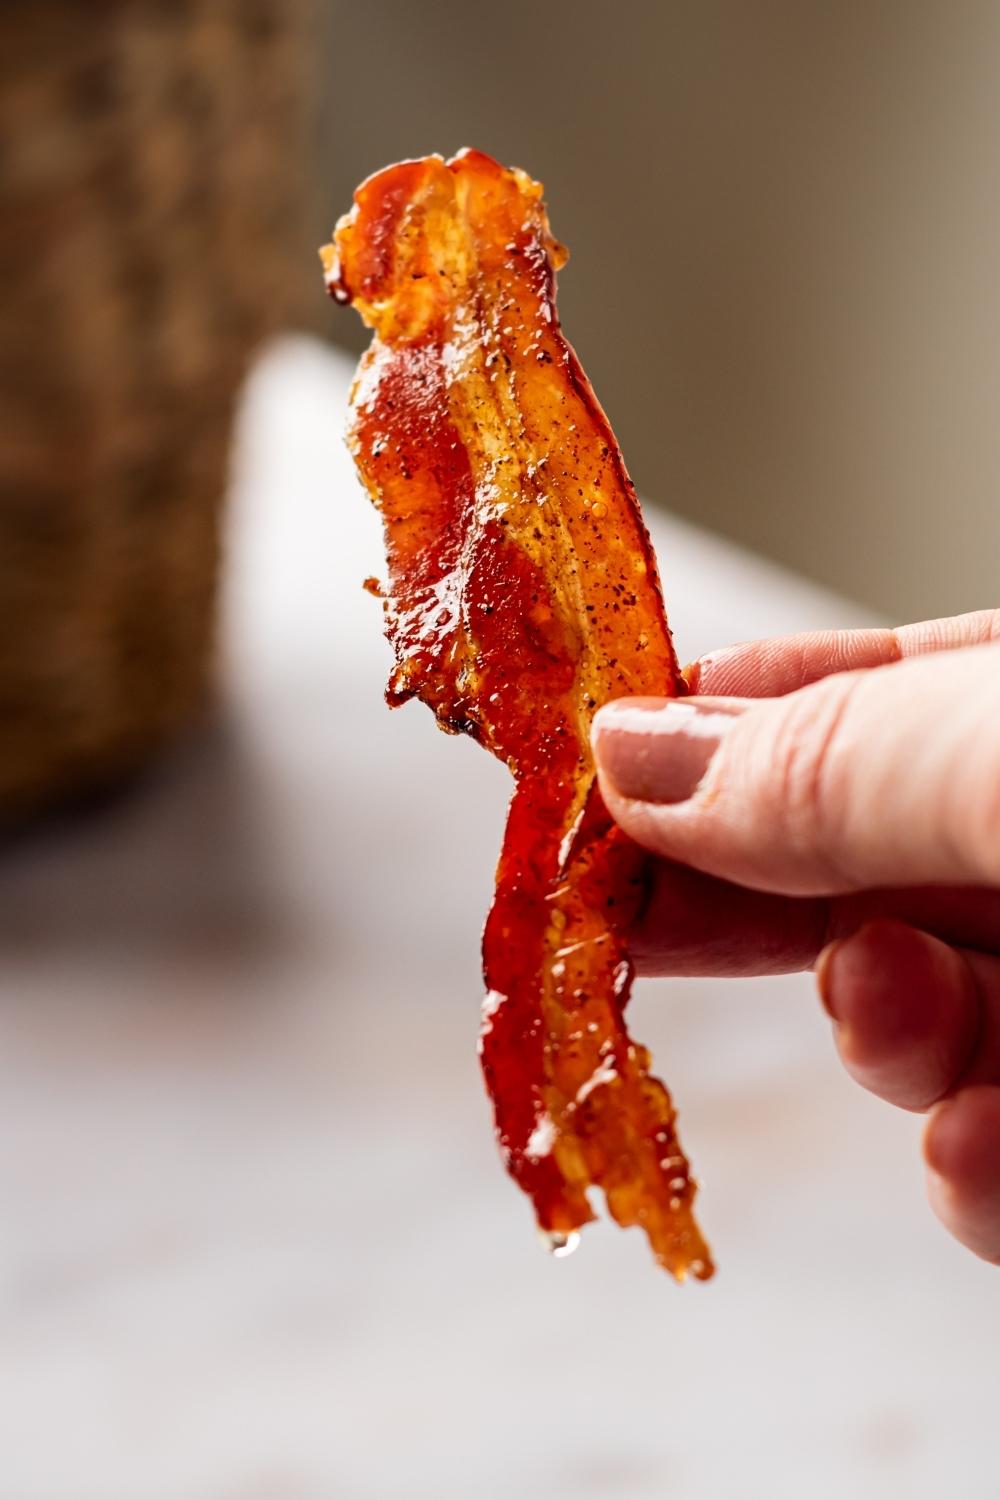 A hand holding a slice of million Dollar bacon.